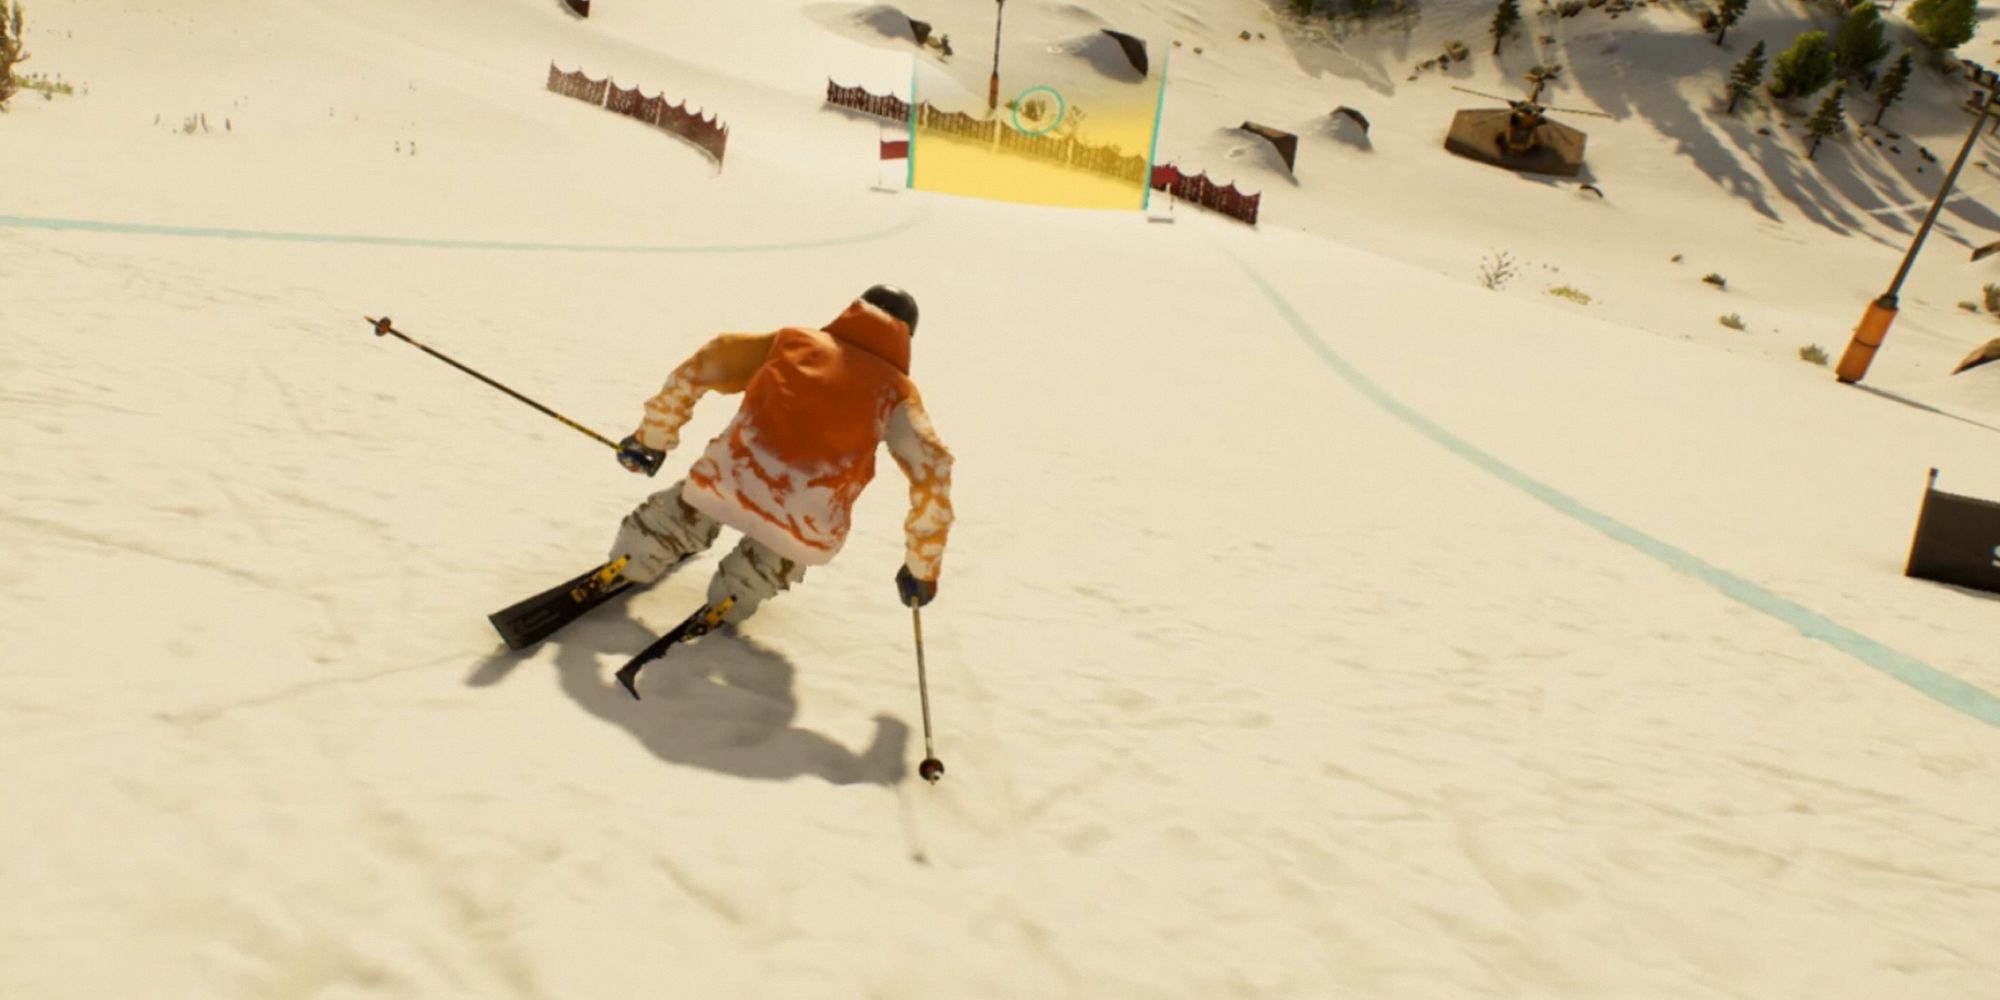 Riders Republic. Orange jacket riding on skis in snow.